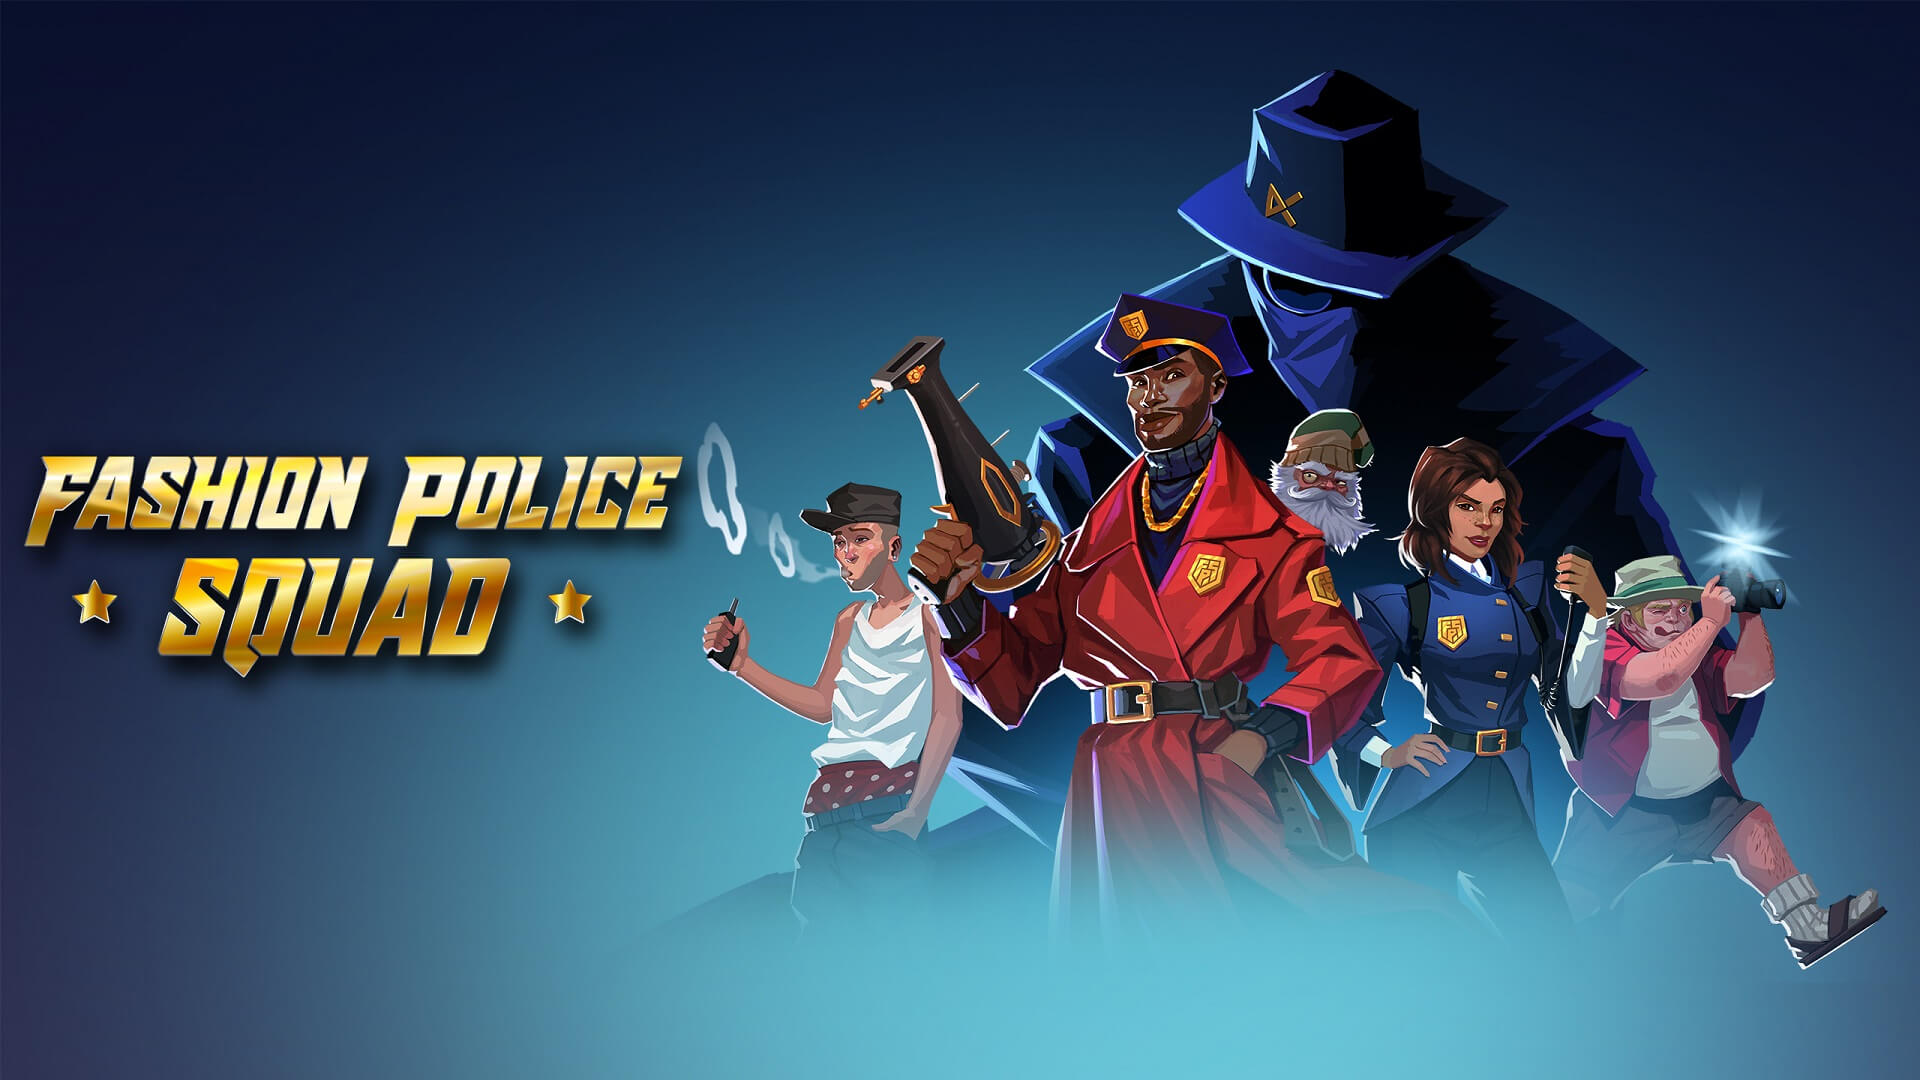 Fashion Police Squad выходит на Xbox в феврале, после удачного старта на PC